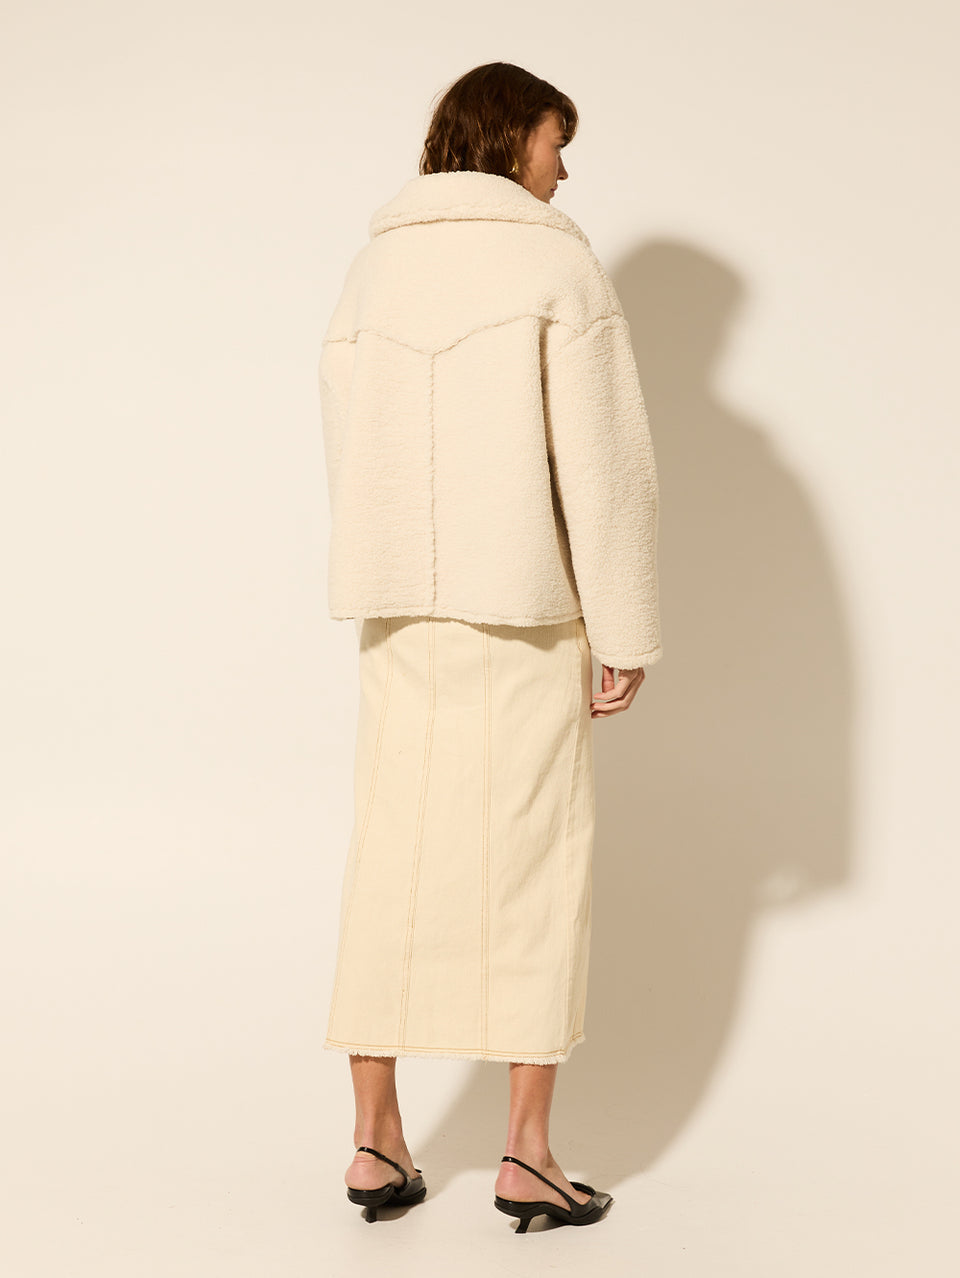 Lianna Jacket KIVARI | Model wears cream reversible jacket back view